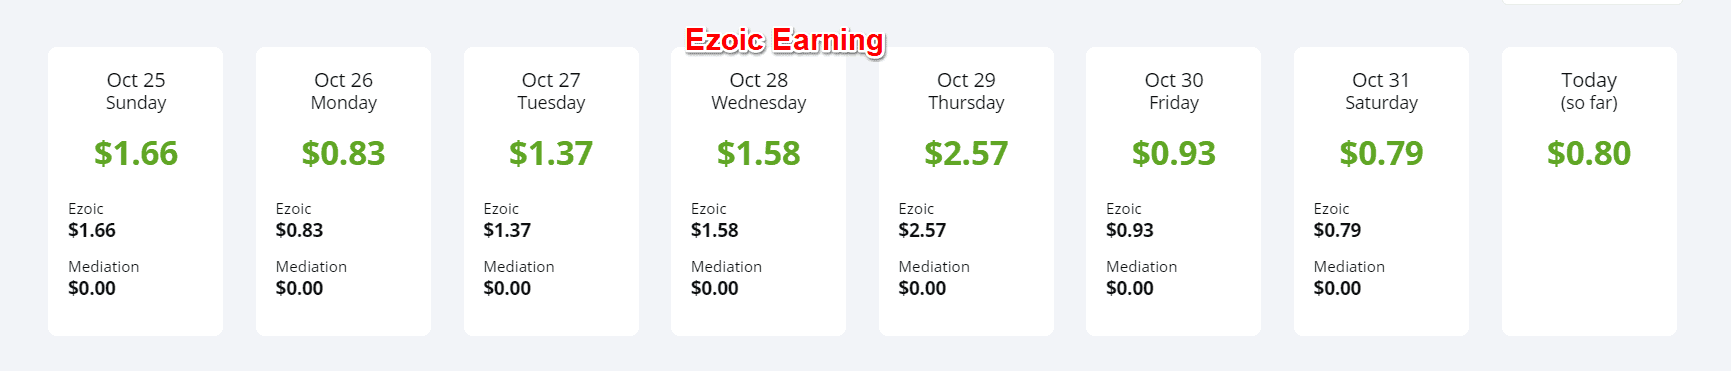 Ezoic Earning increased 